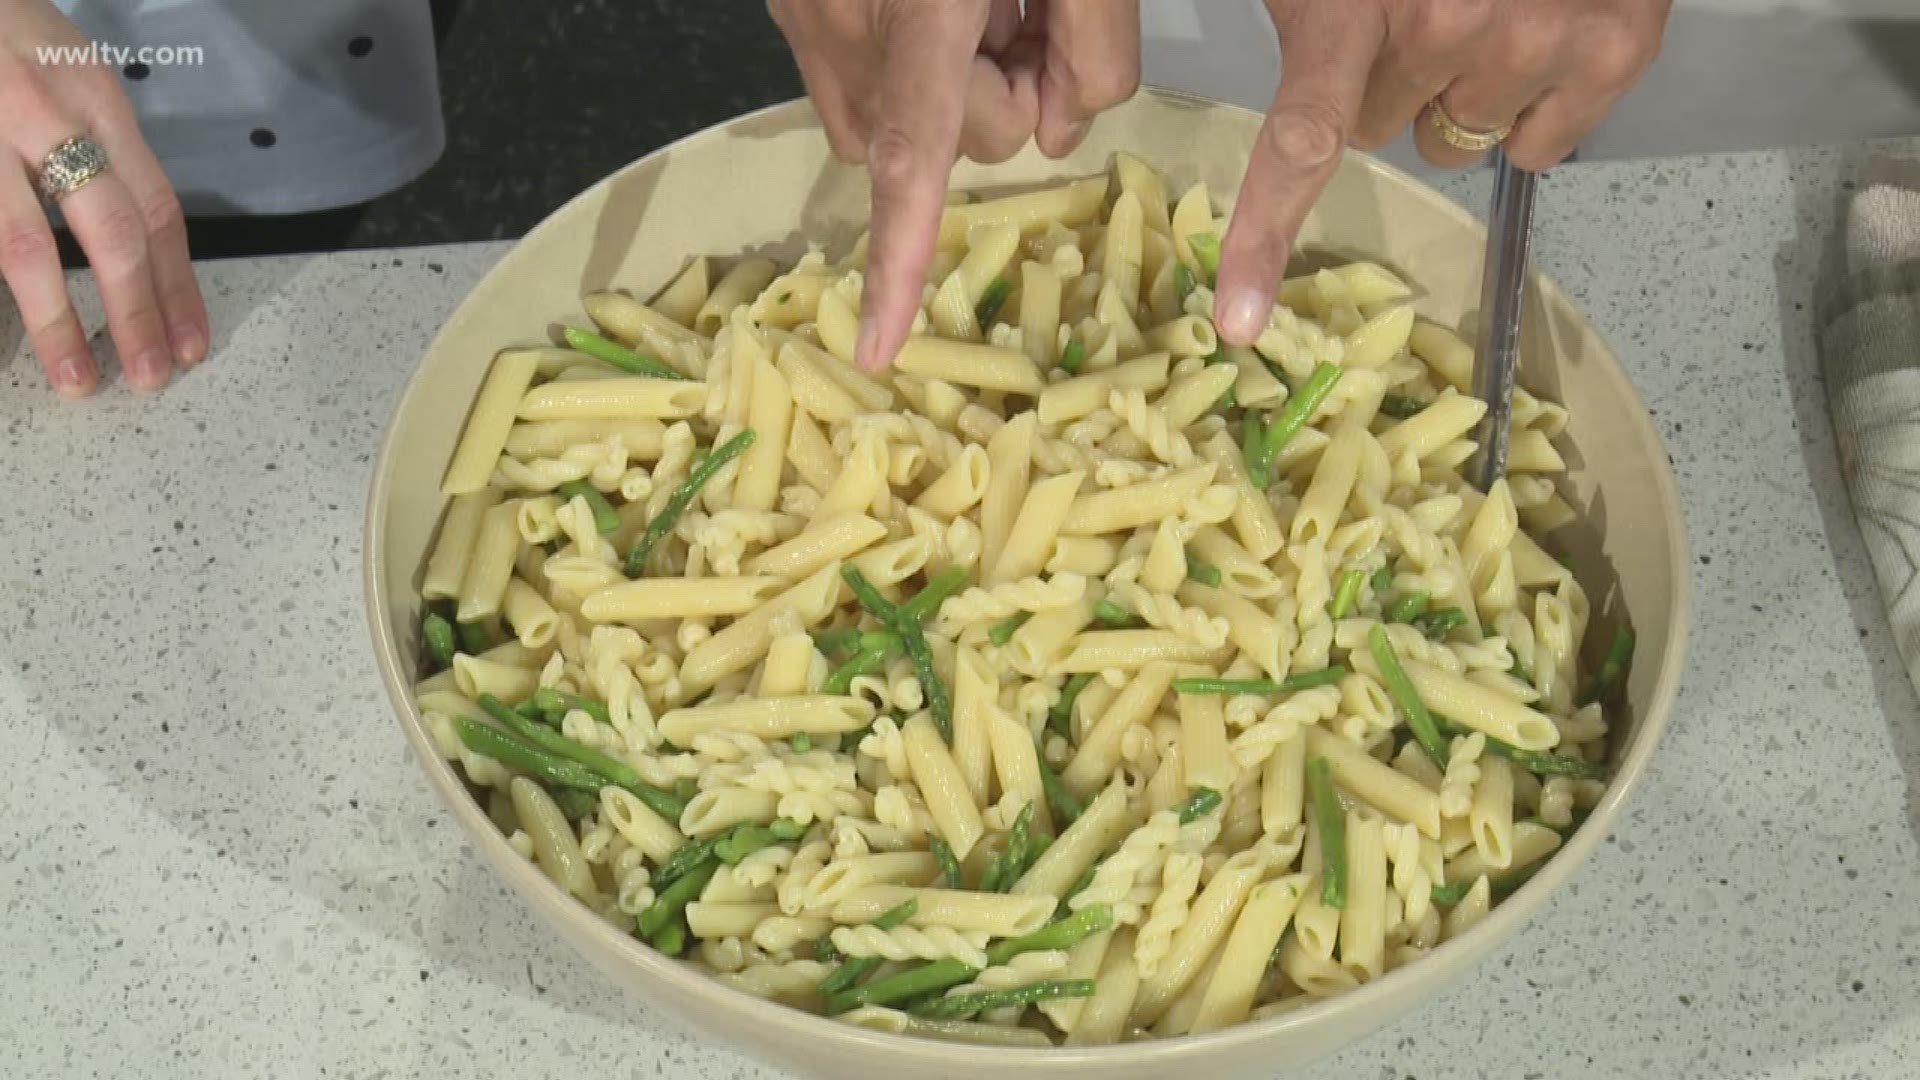 Chef Kevin Belton shows Leslie Spoon how he makes a Pesto Pasta 'al dente.'